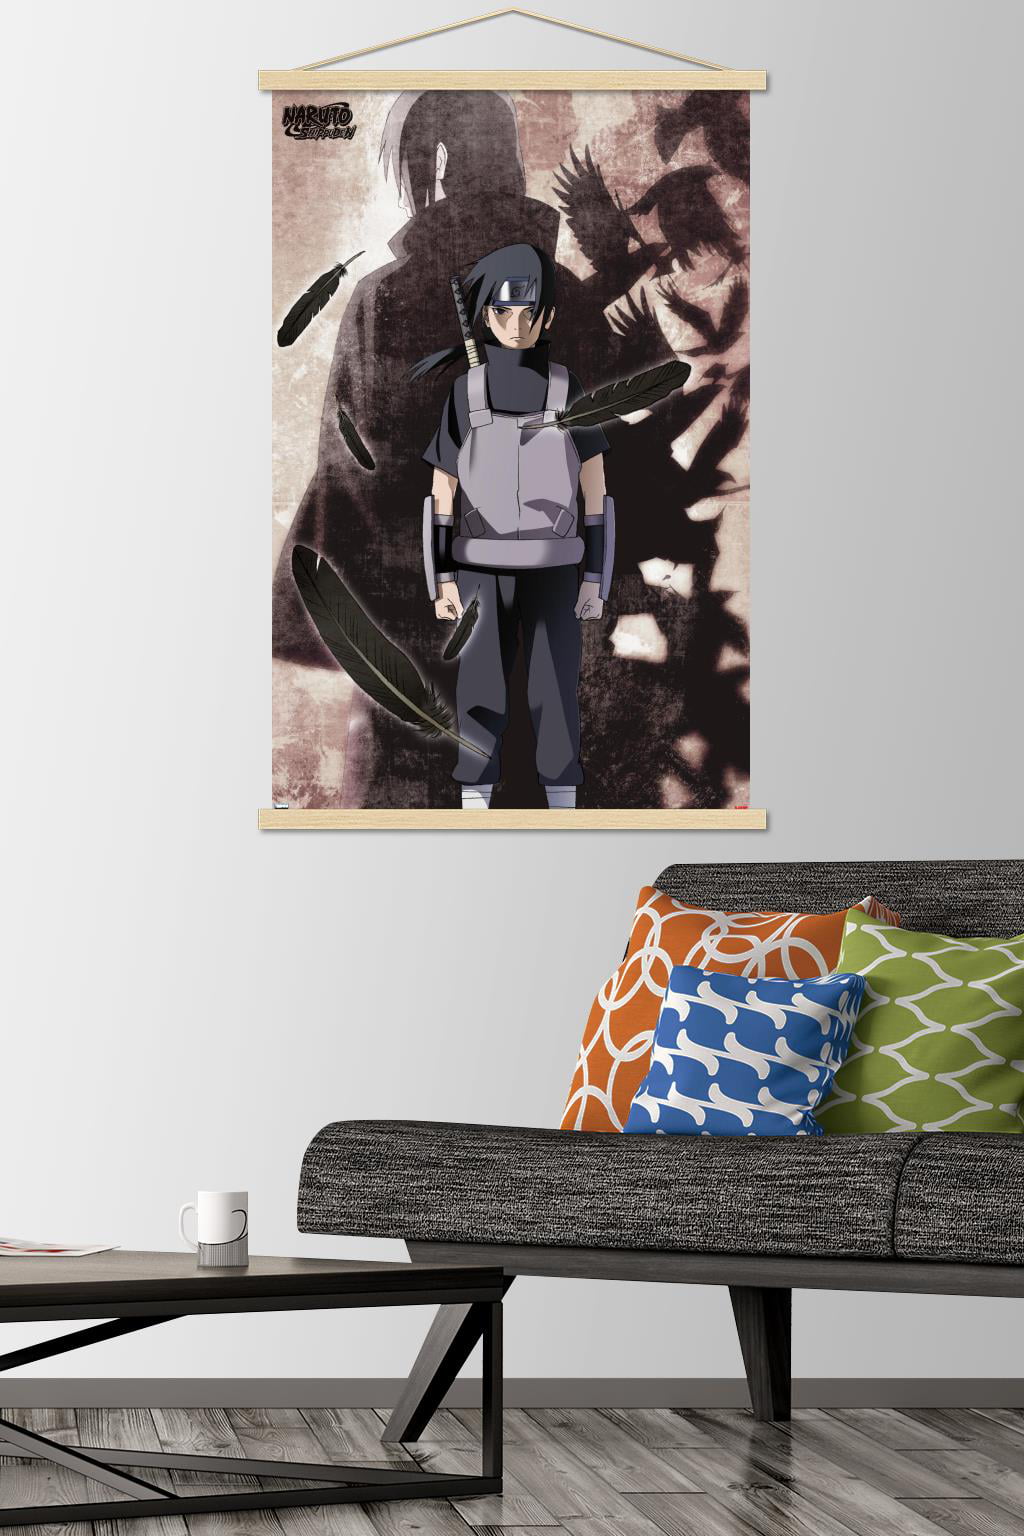 WerNerk Naruto Shippuden Poster Fabric Scroll Painting Wall Picture Naruto  Anime Characters Kakashi Uchiha Itachi Wall Scroll Hanging Decor(2  Sizes)(M: 30X45 cm H06) : : Home & Kitchen